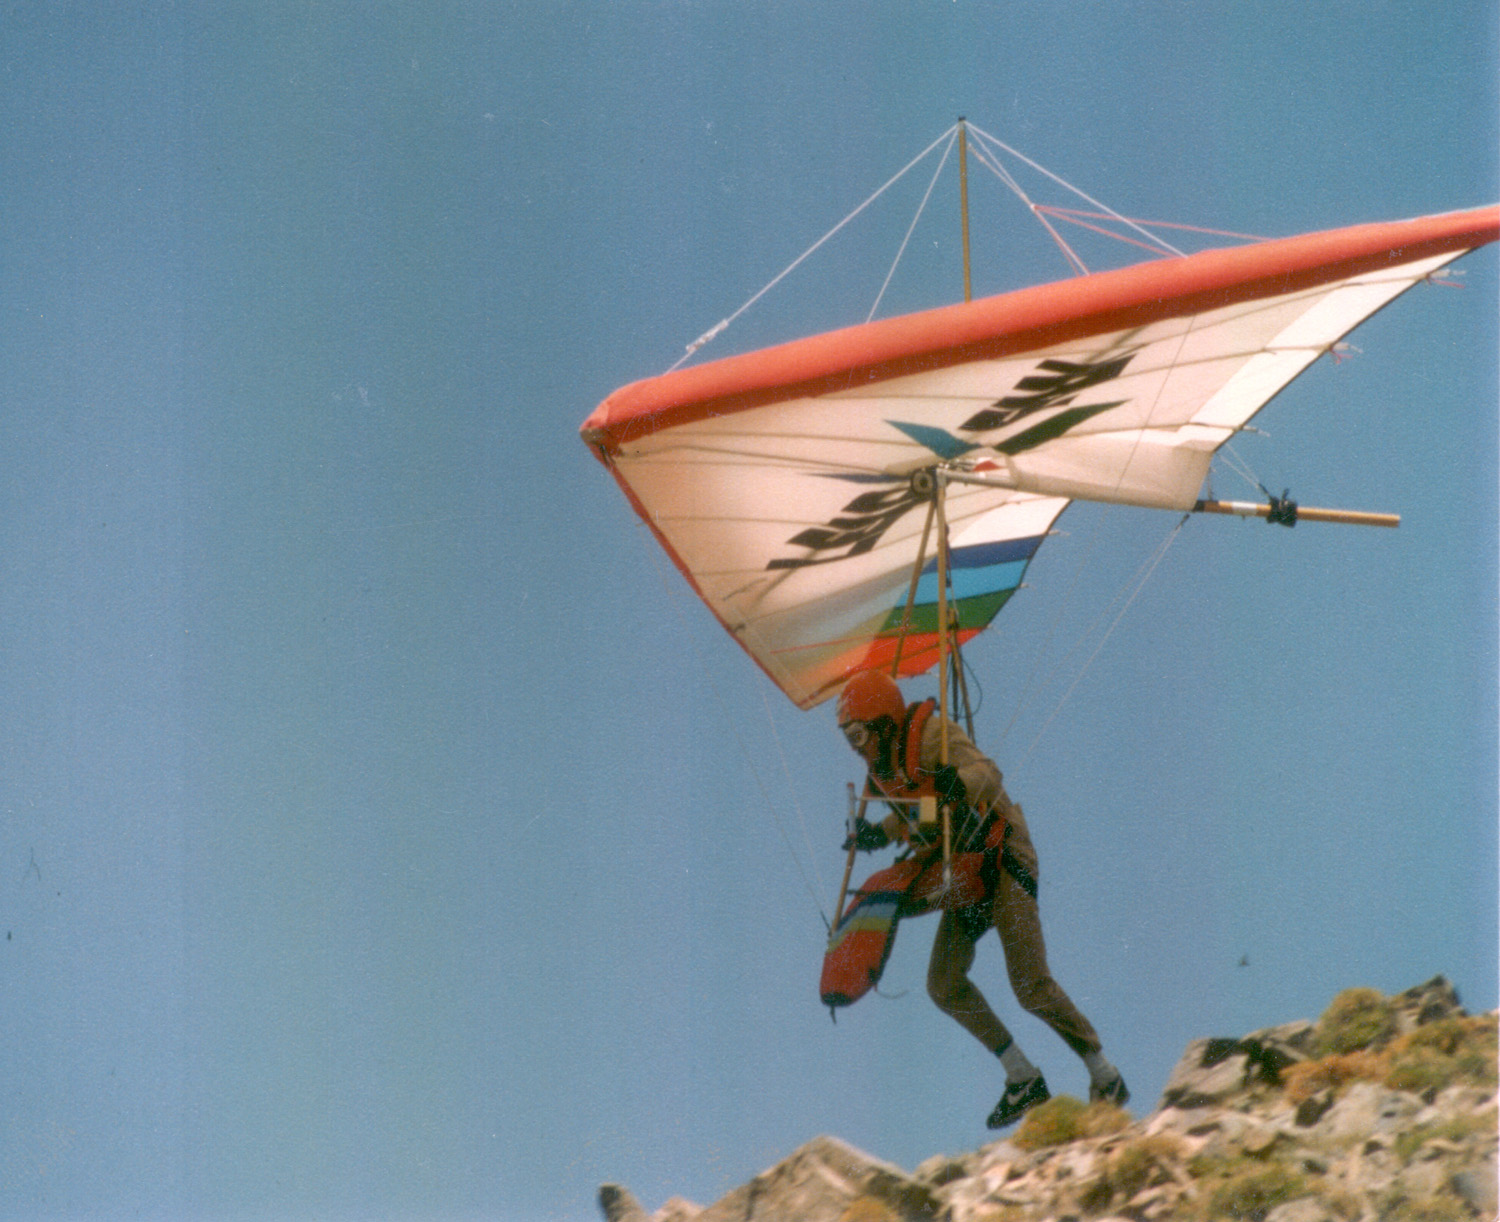 Paul Hamilton launching his ultralight trike wing as a hang glider